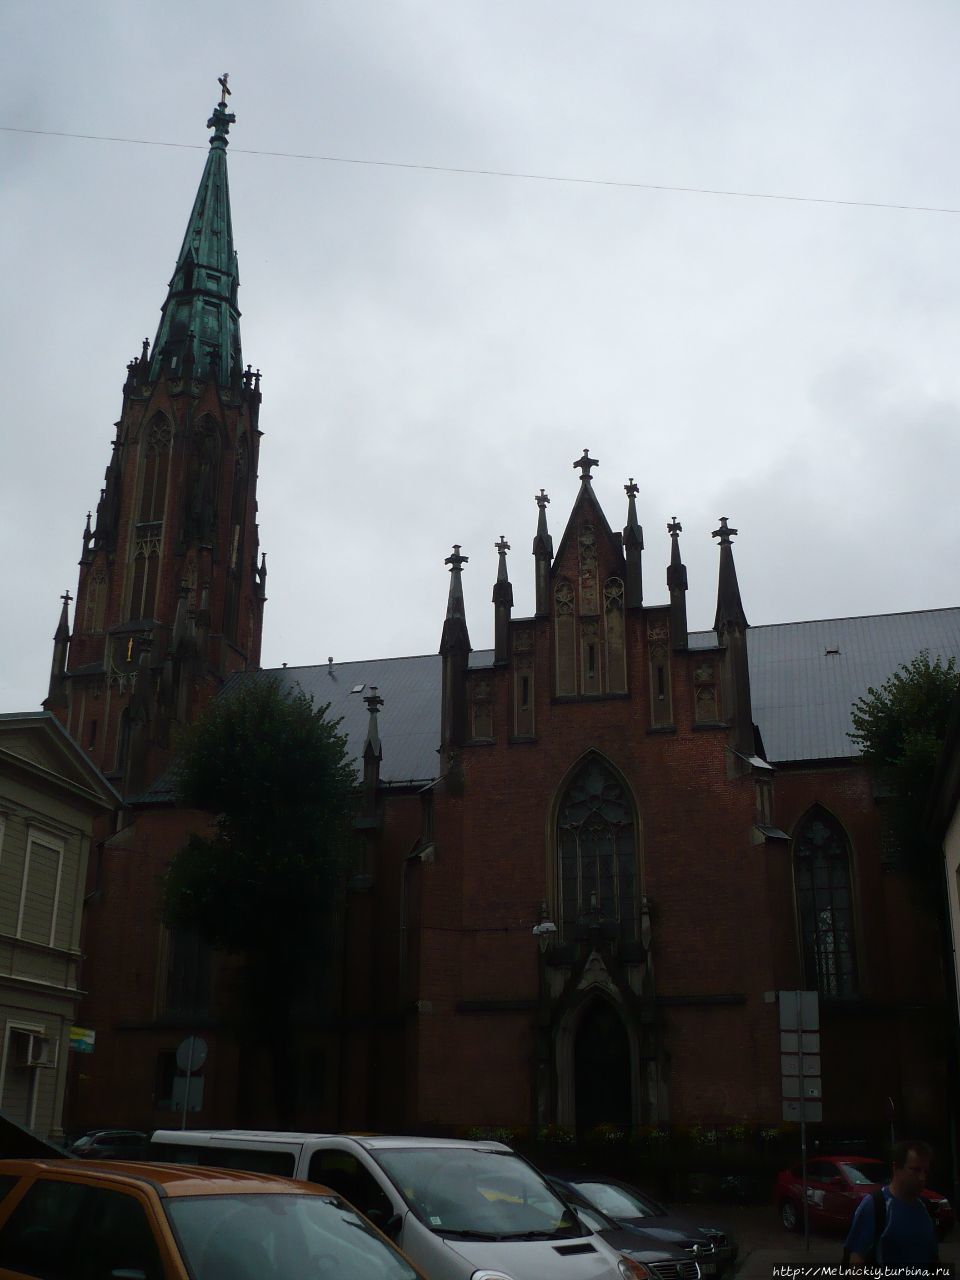 Старая Лютеранская церковь Св. Гертруды Рига, Латвия